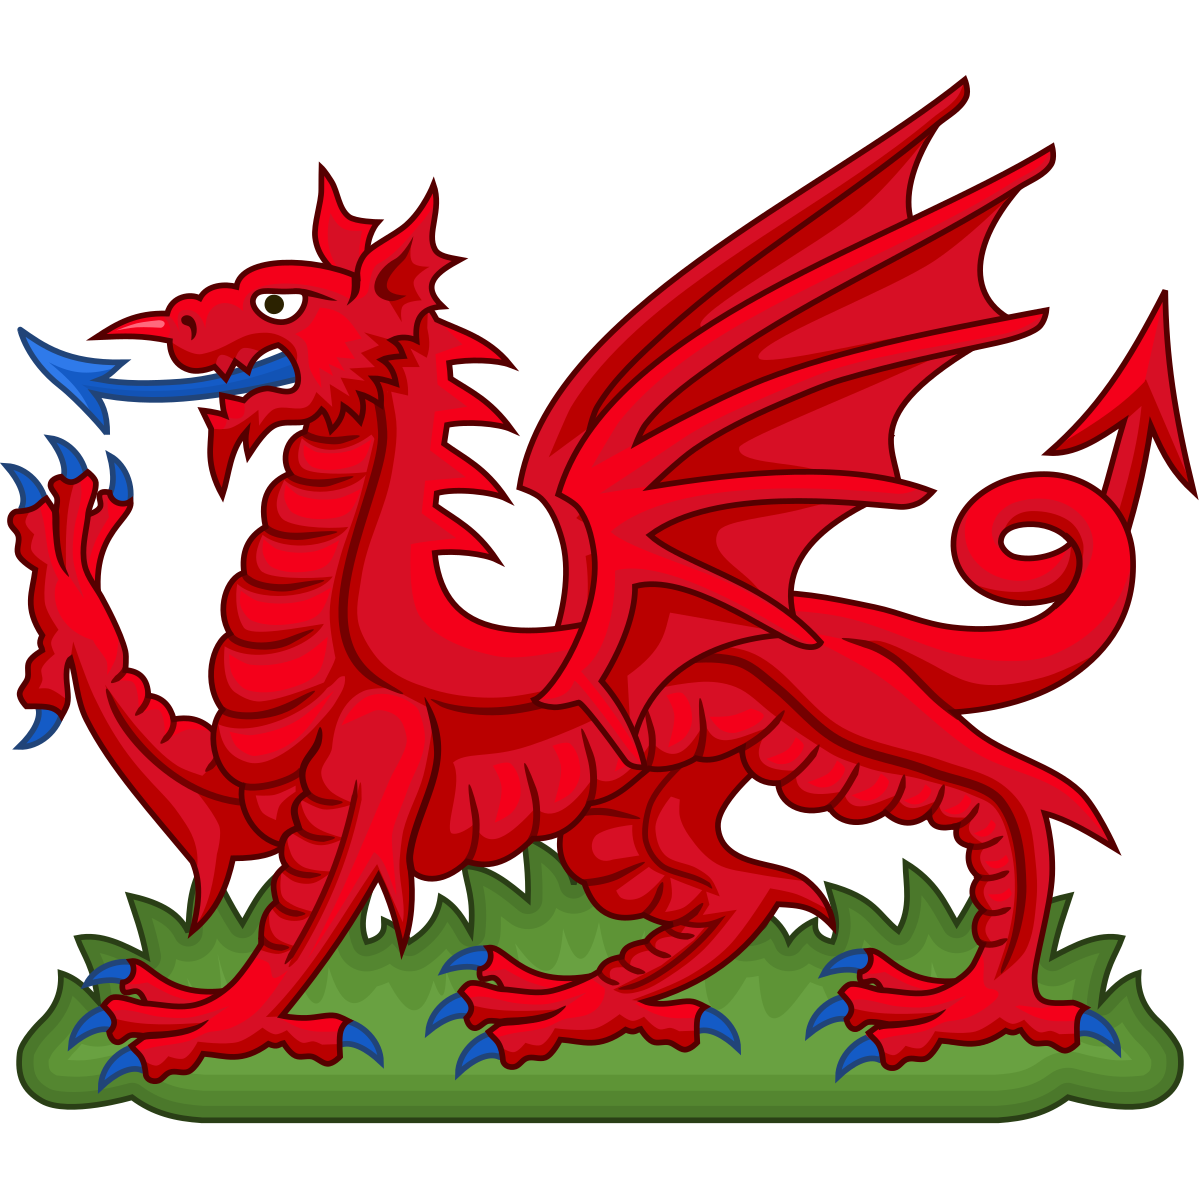 heraldry crest dragon